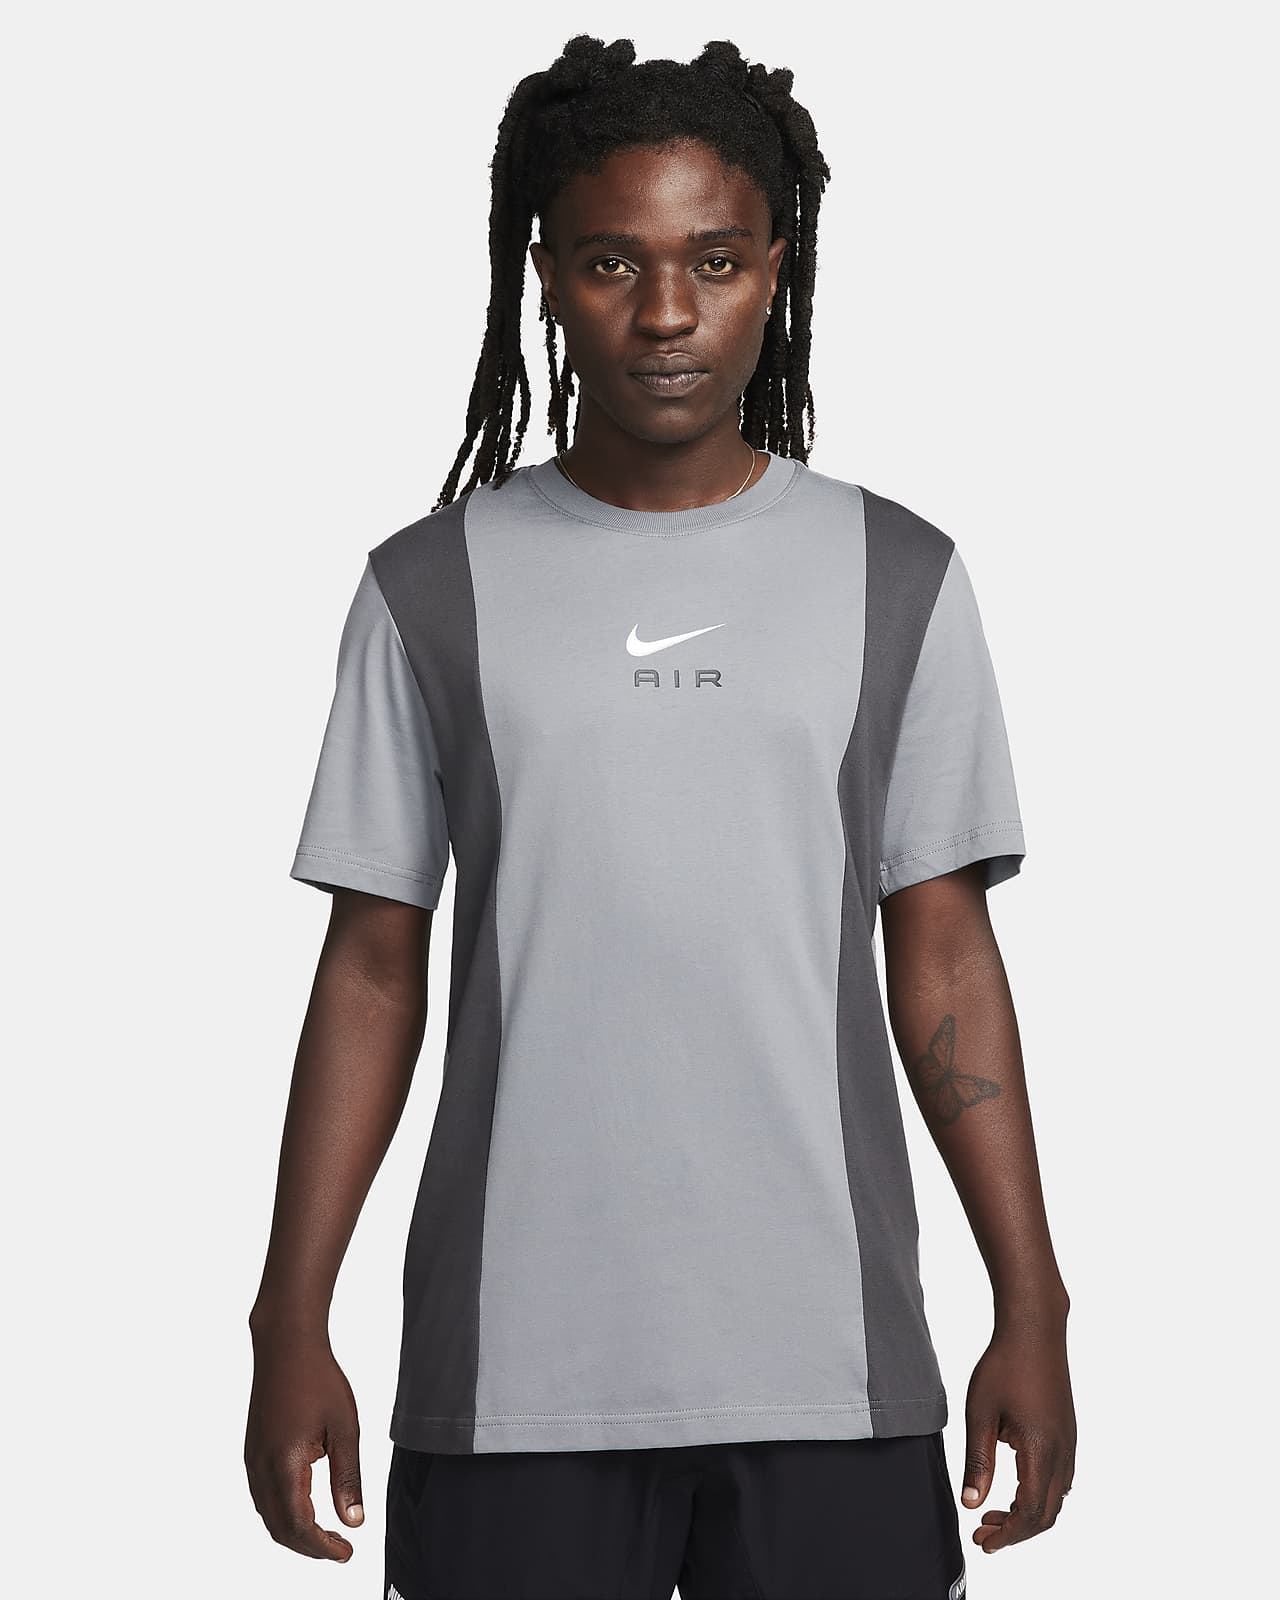 Nike Air Men's Short-Sleeve Top. Nike CA